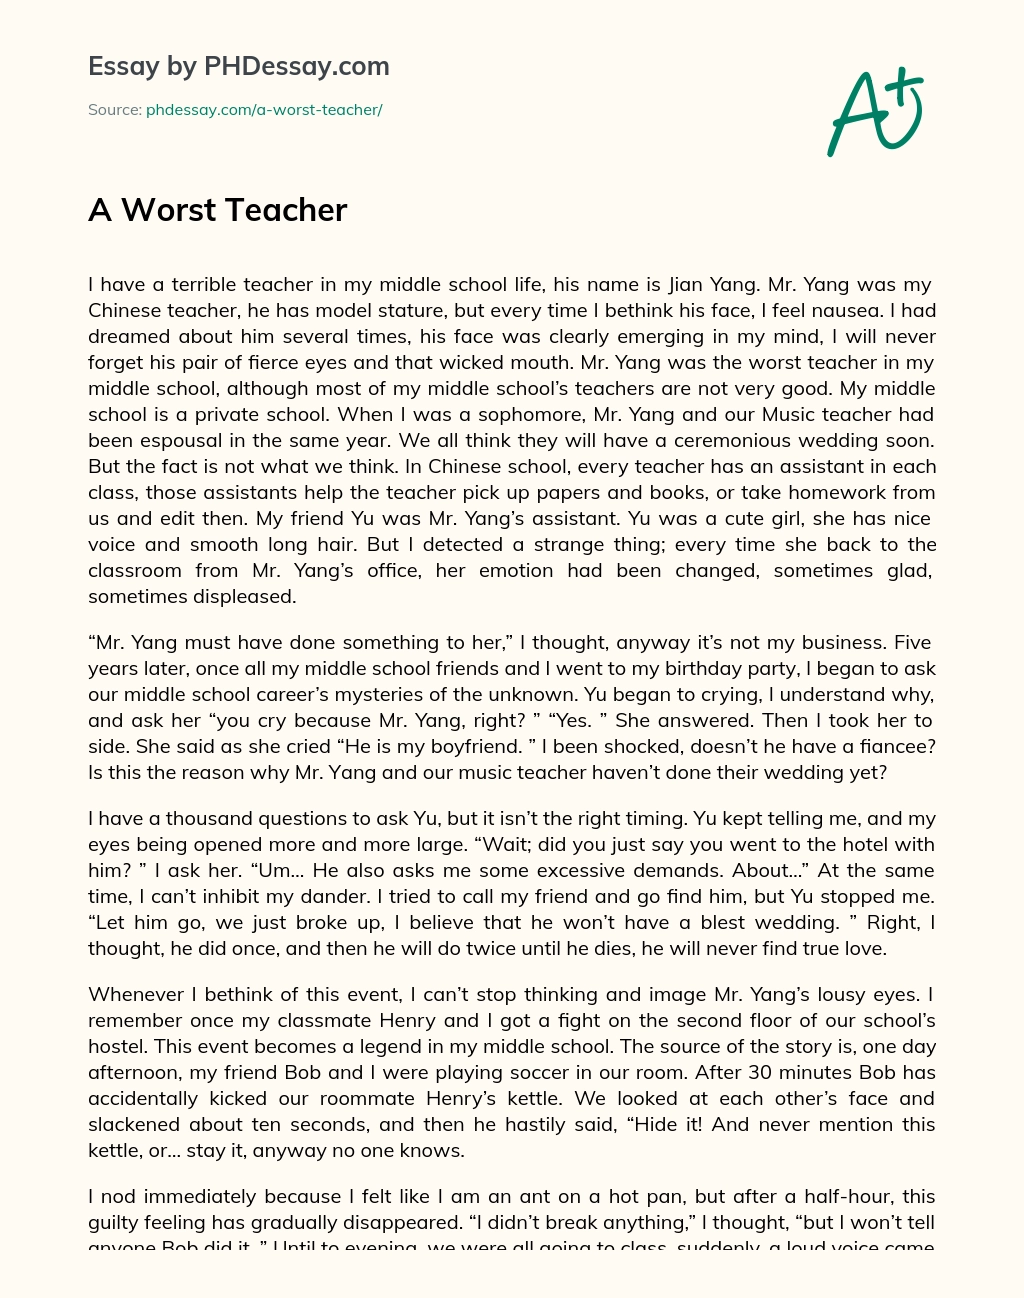 A Worst Teacher essay